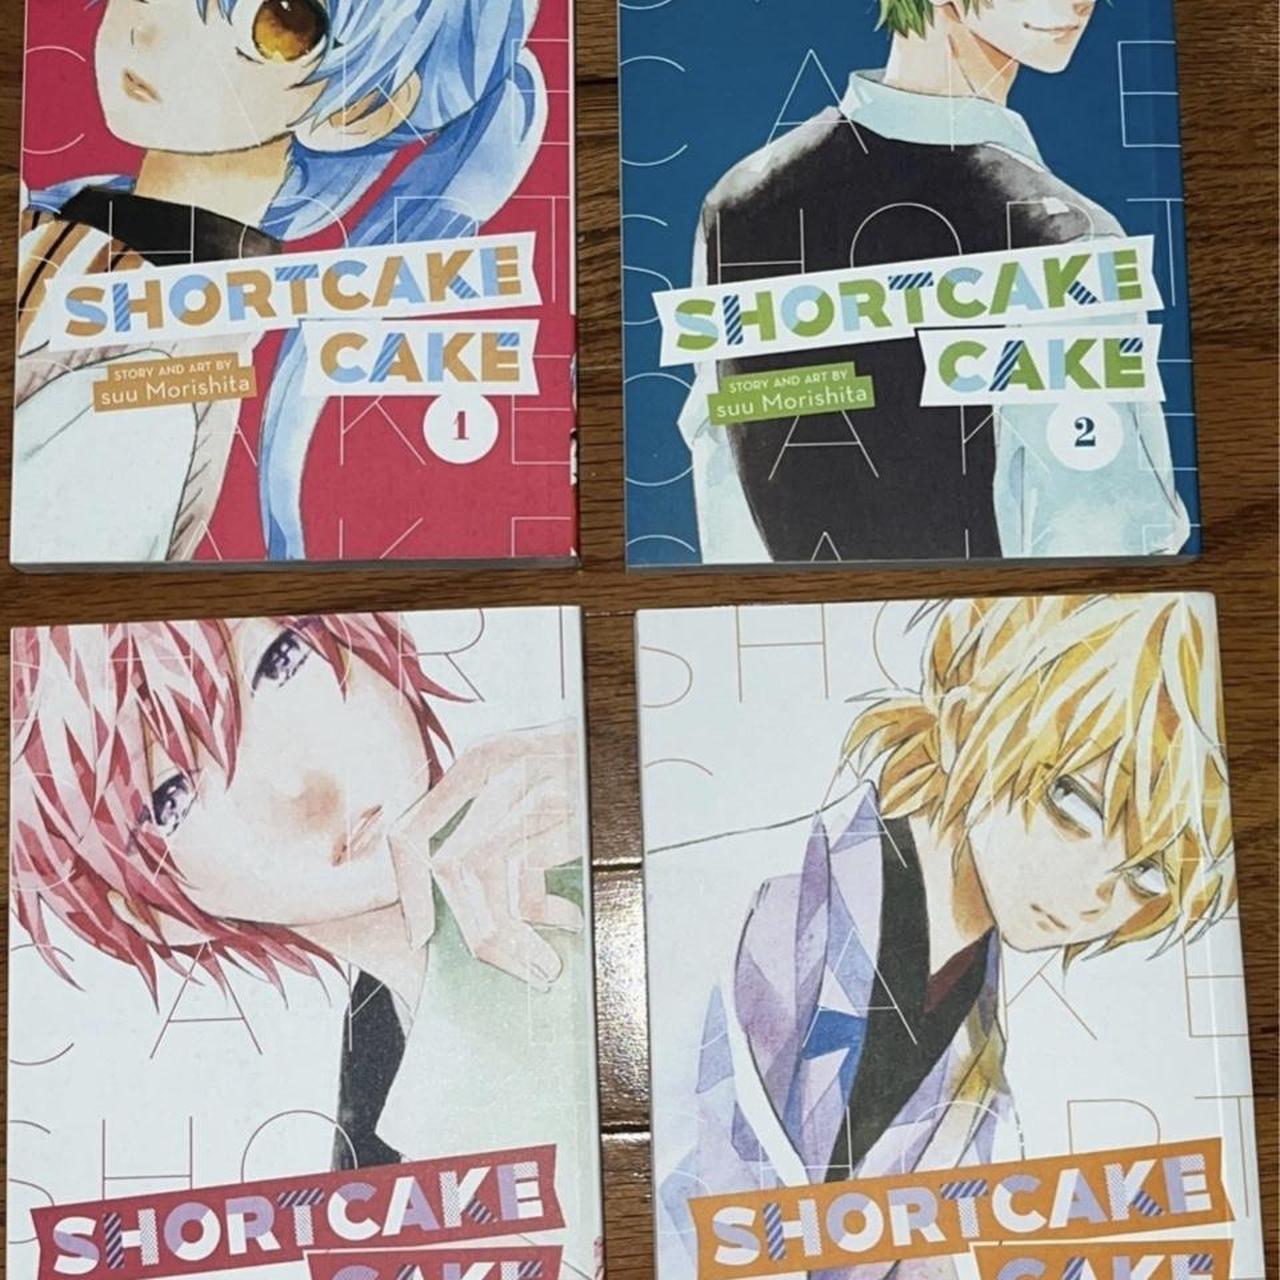 shortcake cake manga Vol's 1 & 2 - English Manga | eBay